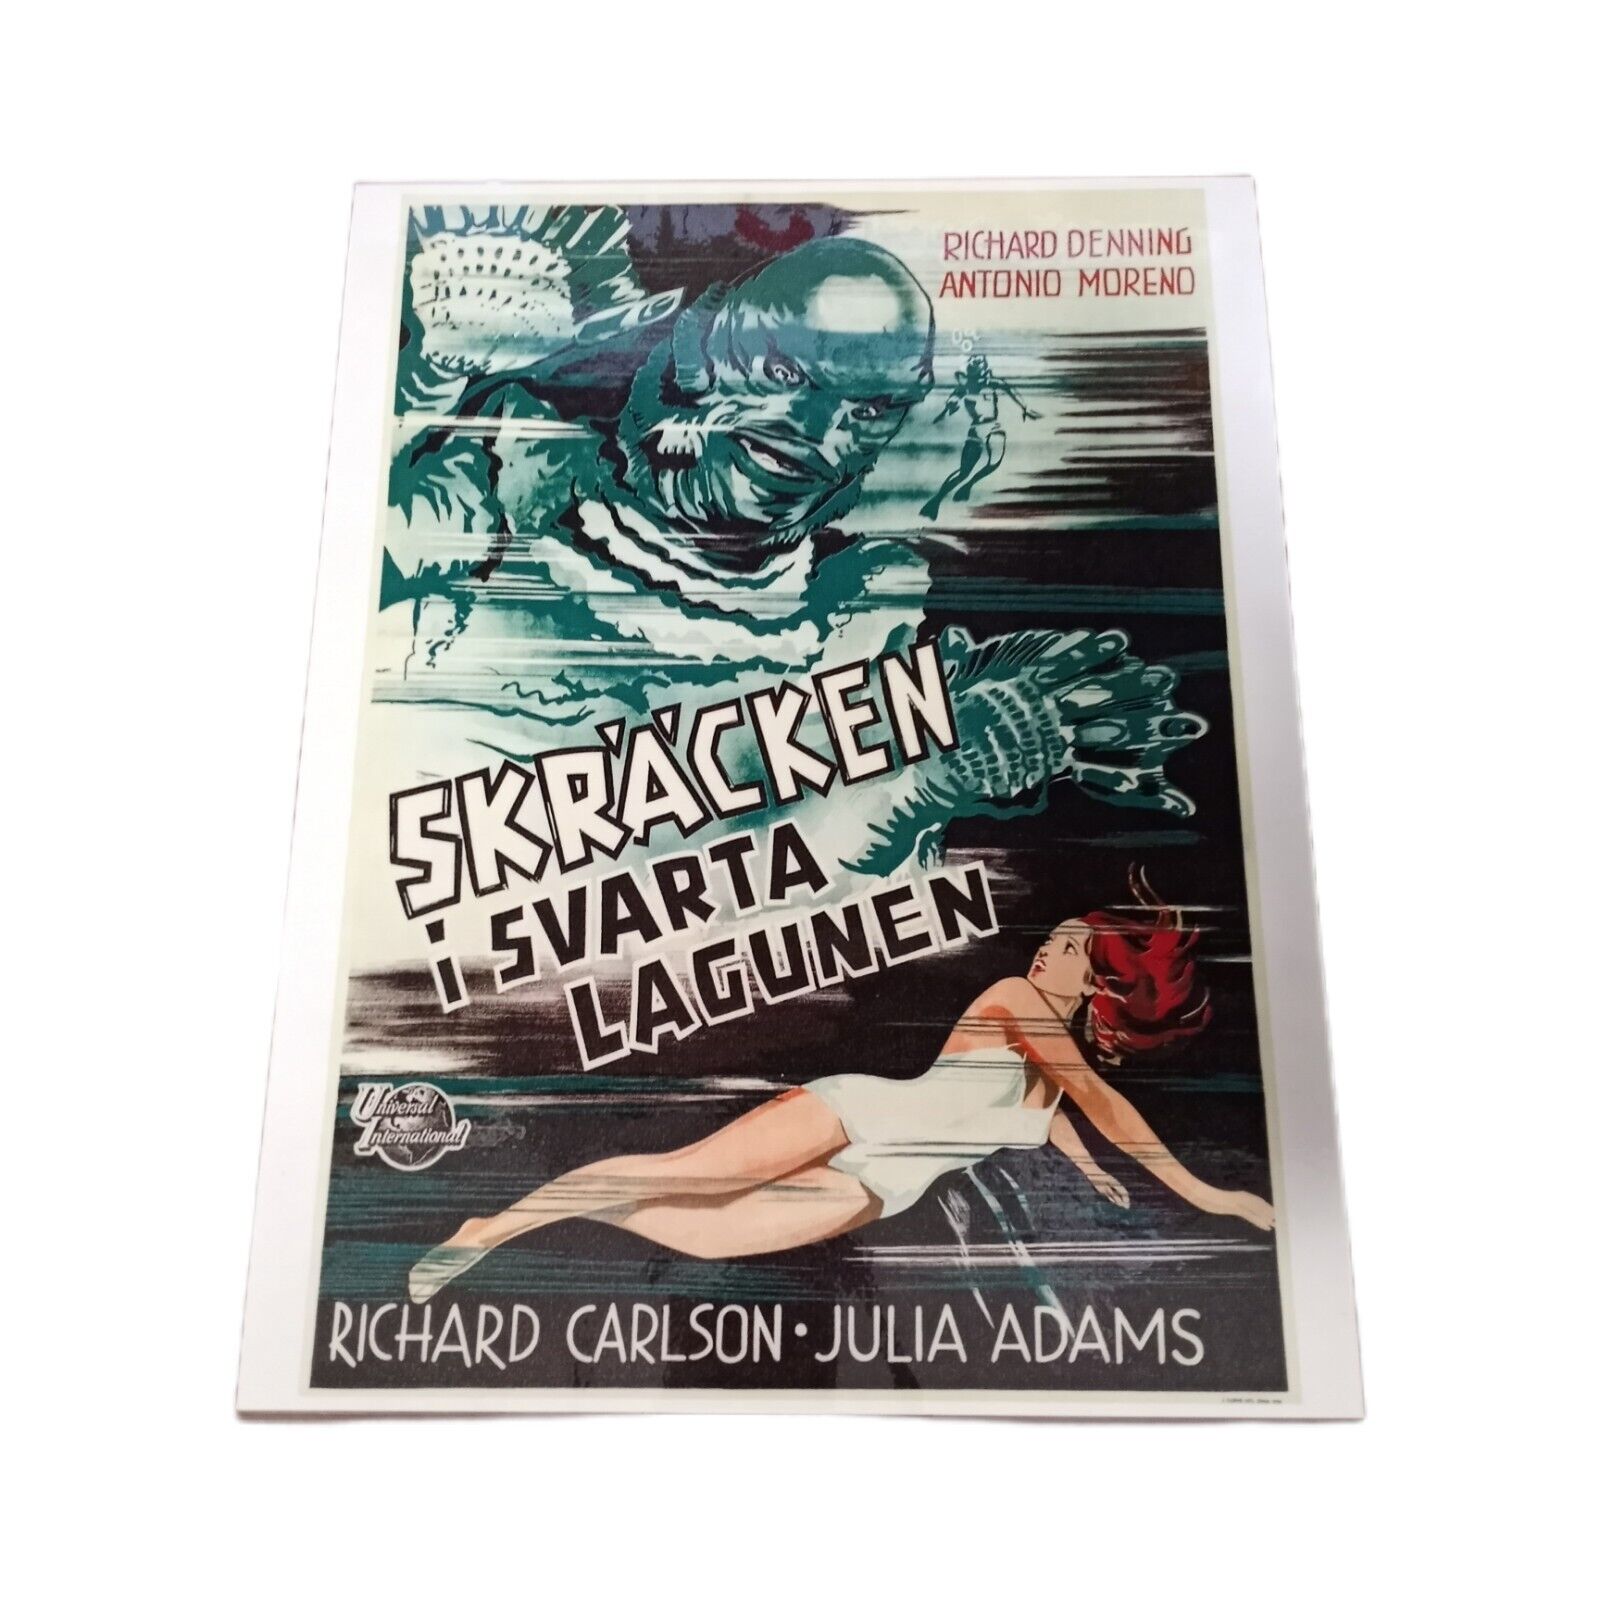 Skracken I Svarta Lagunen 1954 7.5”x11” Laminated Mini Movie Poser Print